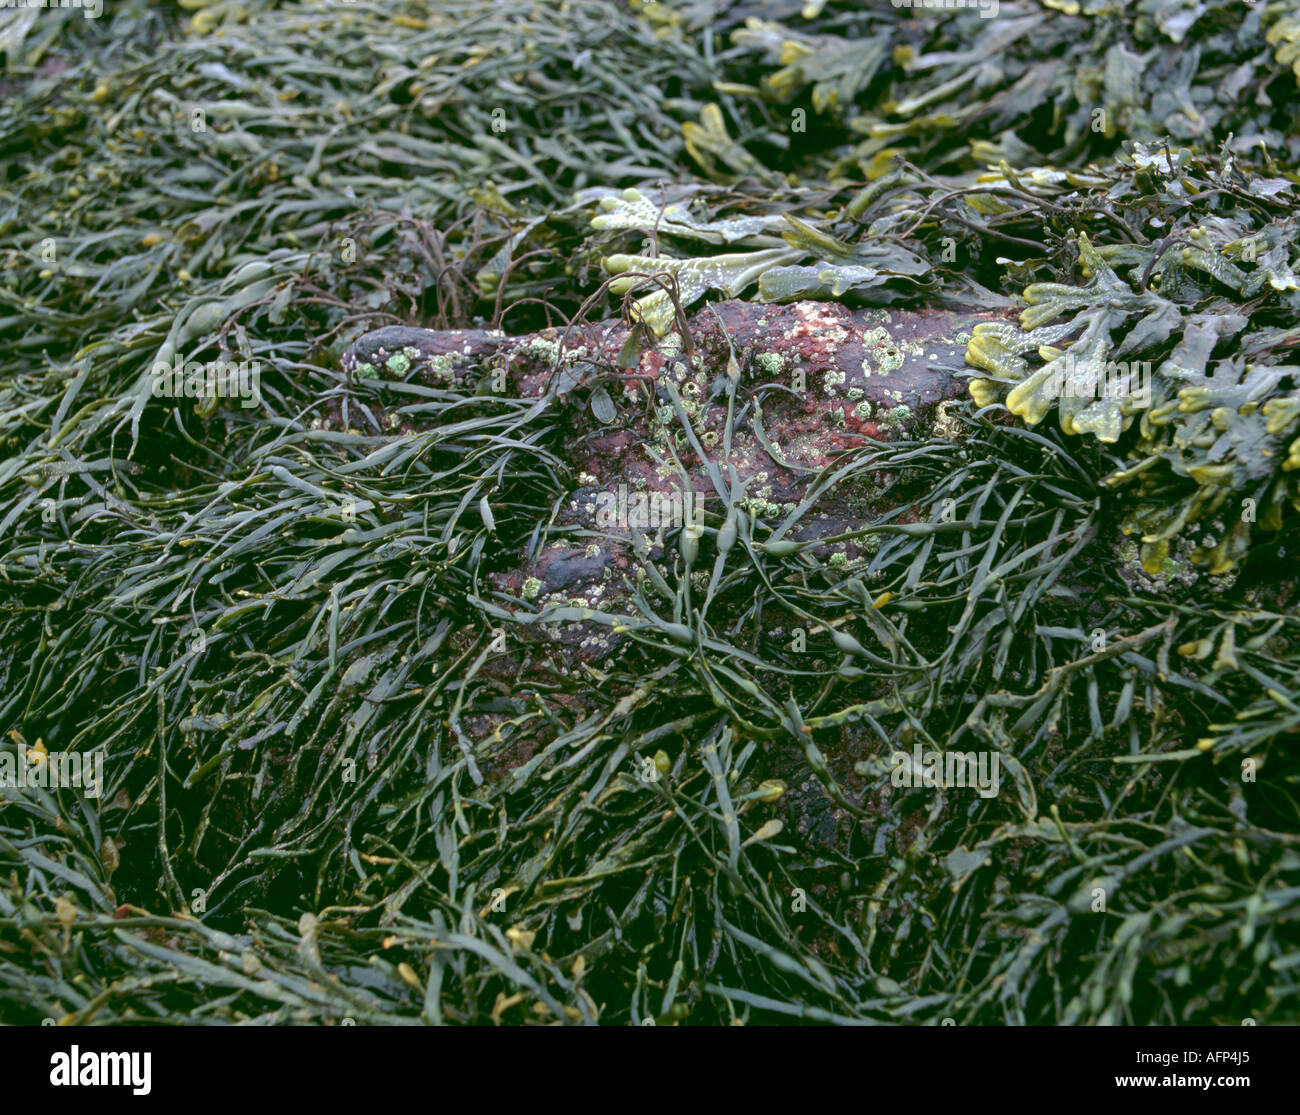 Seaweed on a rock; Bladder wrack (Fucus vesiculosus) and Knotted Wrack (Ascophyllum nodosum). Stock Photo